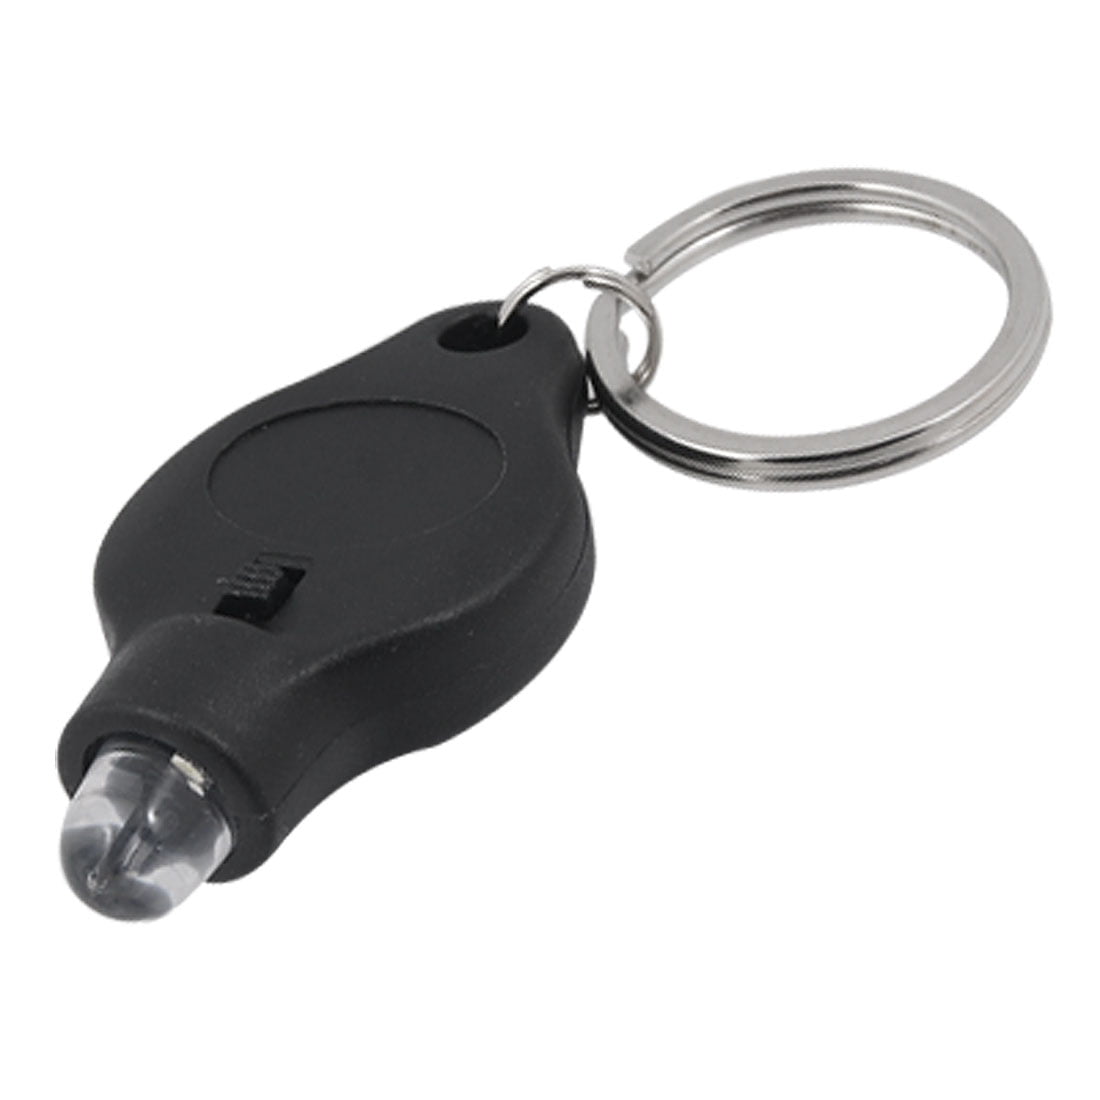 Keychain Handy Flashlight Portable Mini COB LED Handy Lamp Light H3D1 